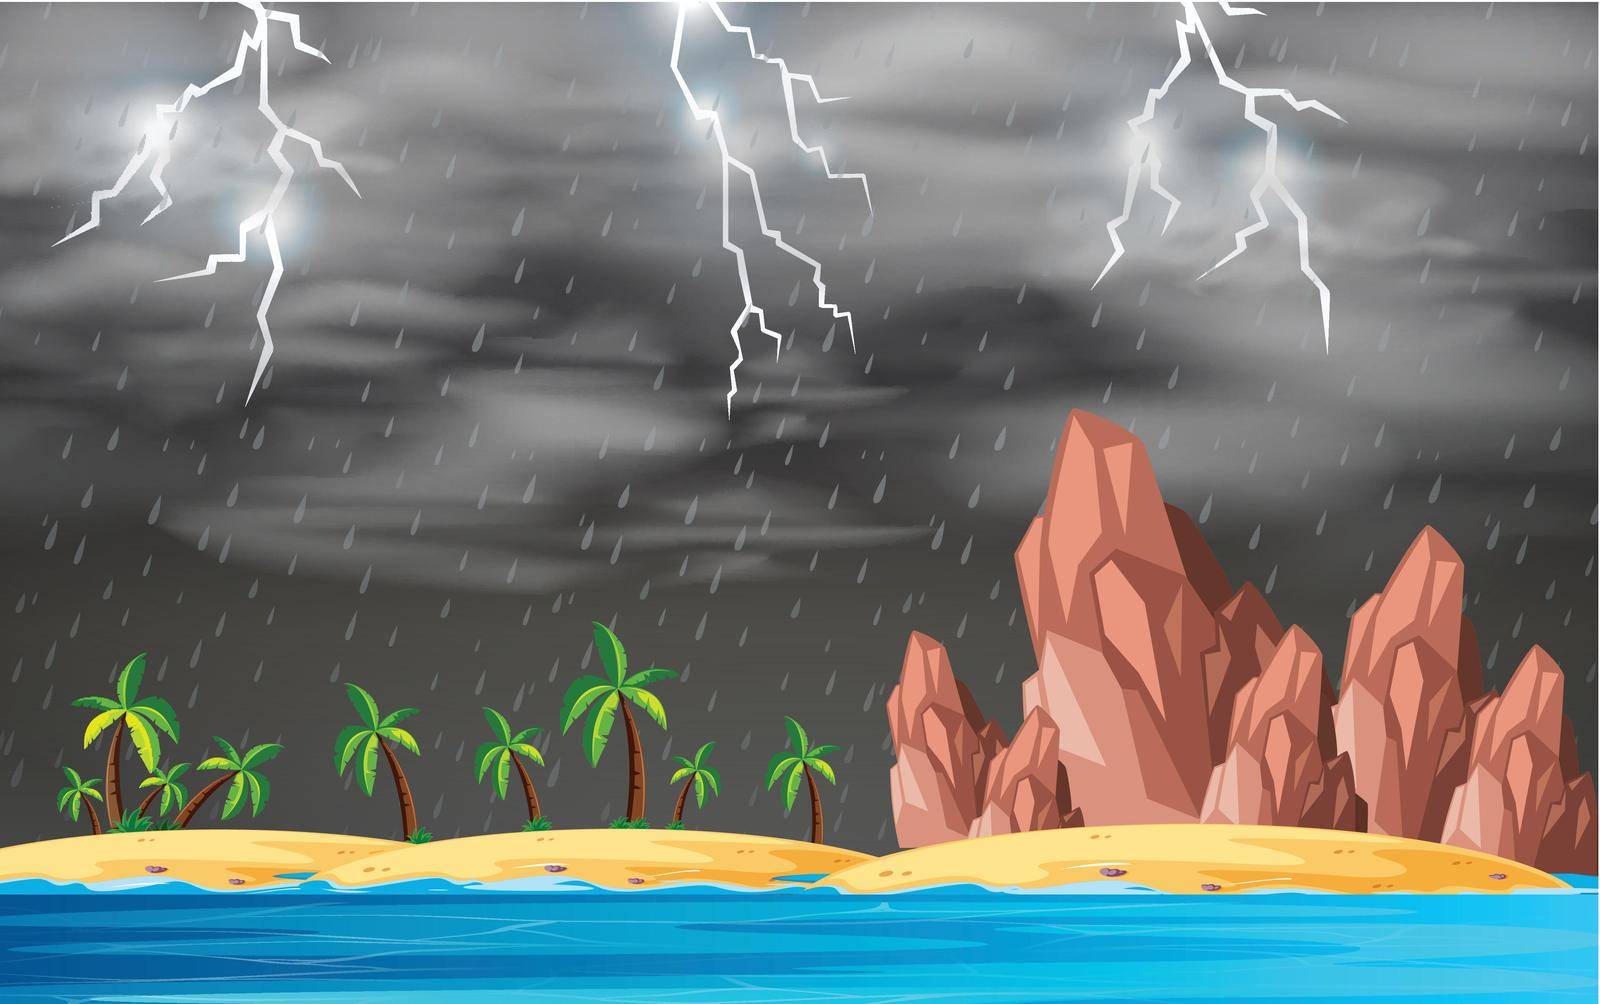 Stormy island background scene illustration